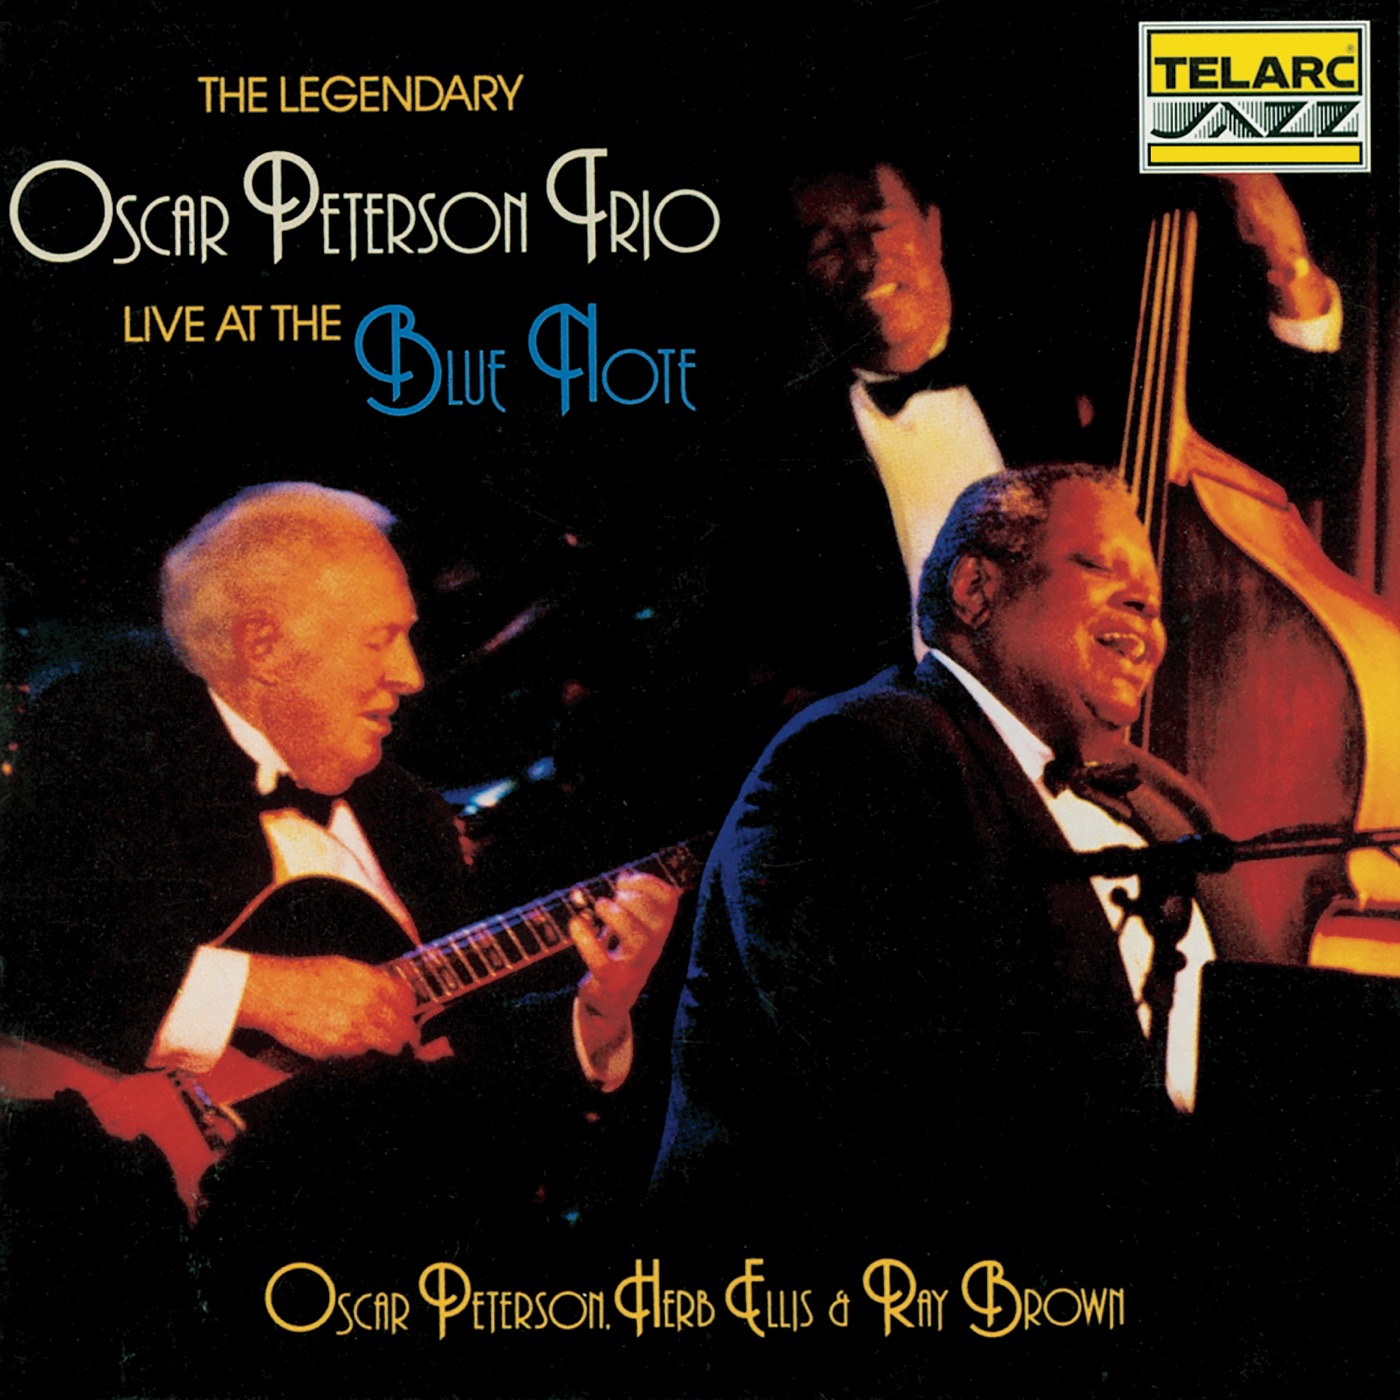 Live At The Blue Note (Live At The Blue Note, New York City, NY / March 16, 1990) by Oscar Peterson Trio